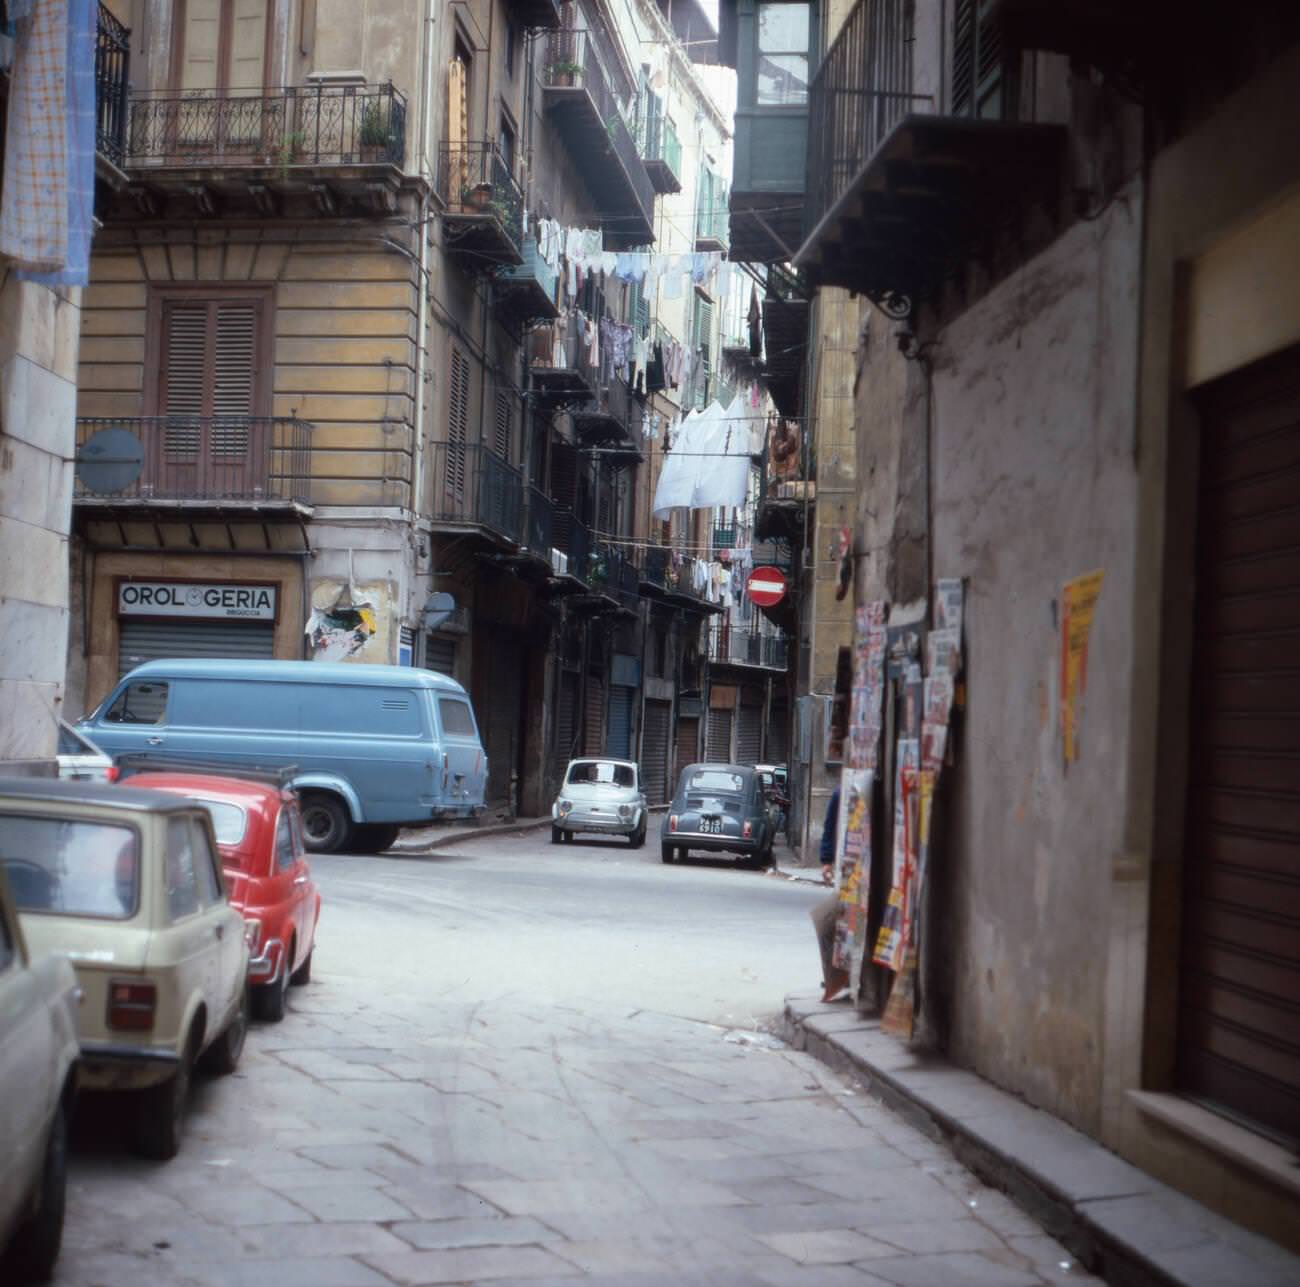 Traffic in Palermo, Sicily, in the 1970s.